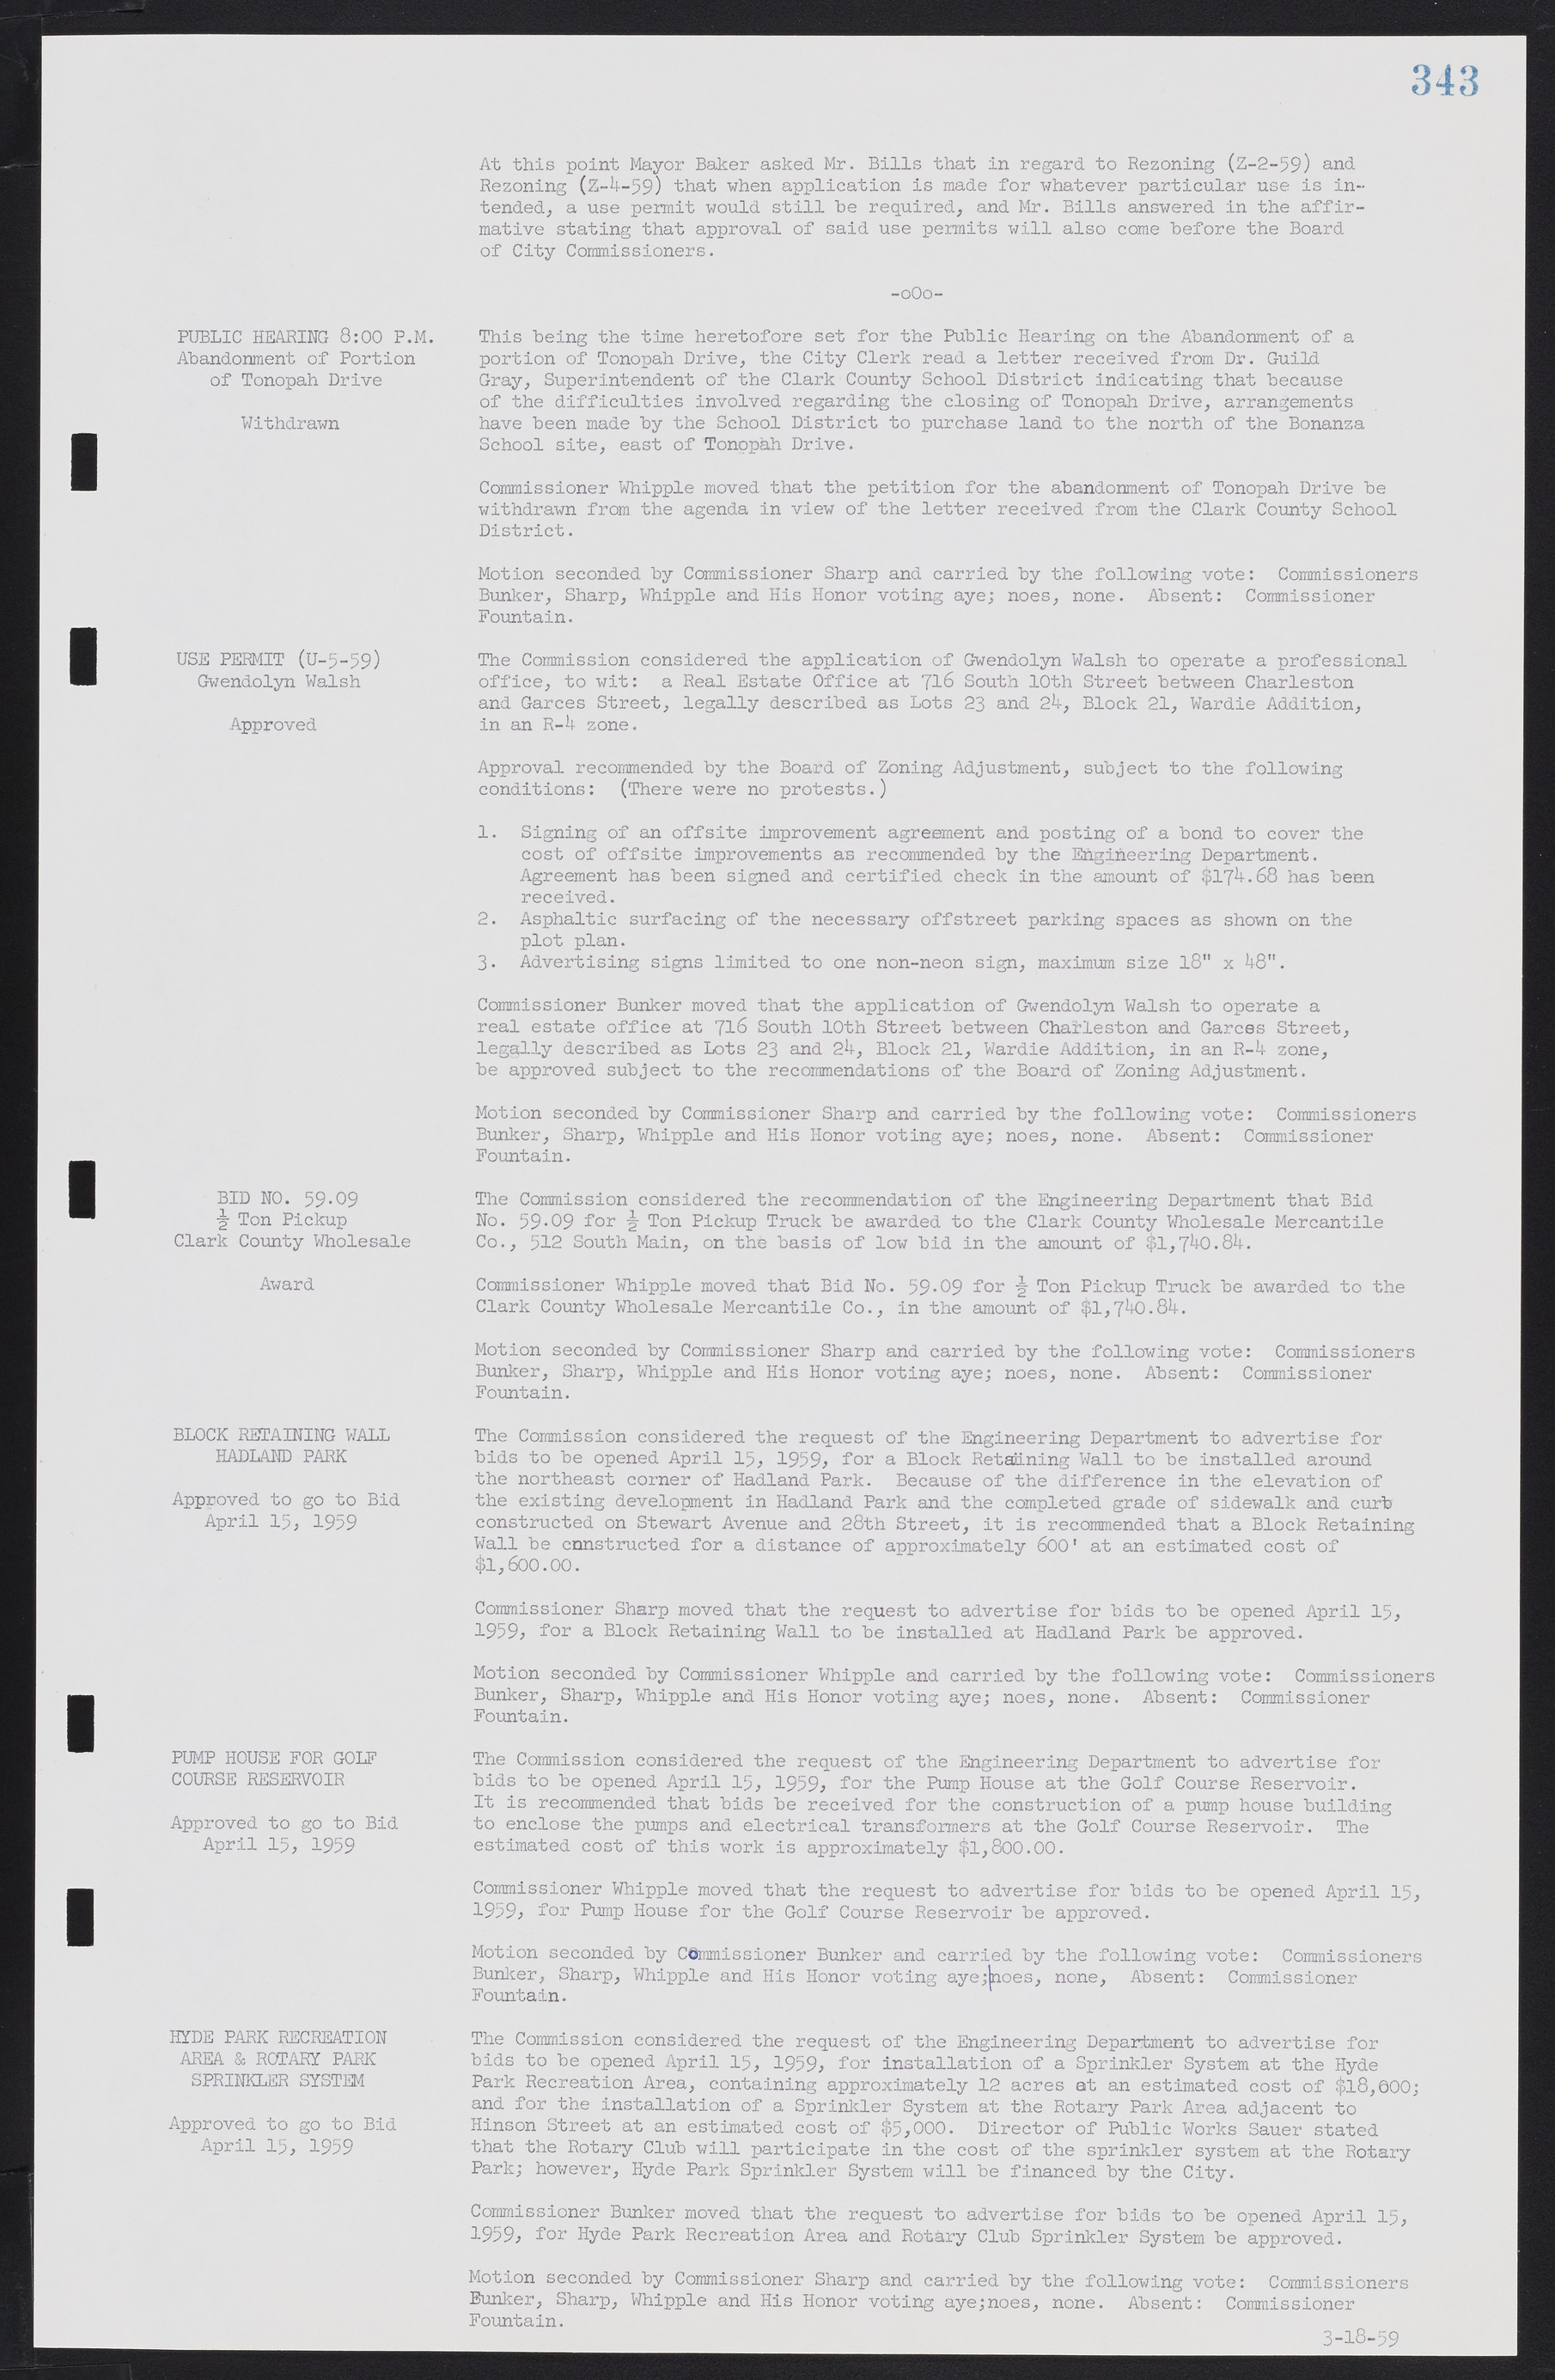 Las Vegas City Commission Minutes, November 20, 1957 to December 2, 1959, lvc000011-351